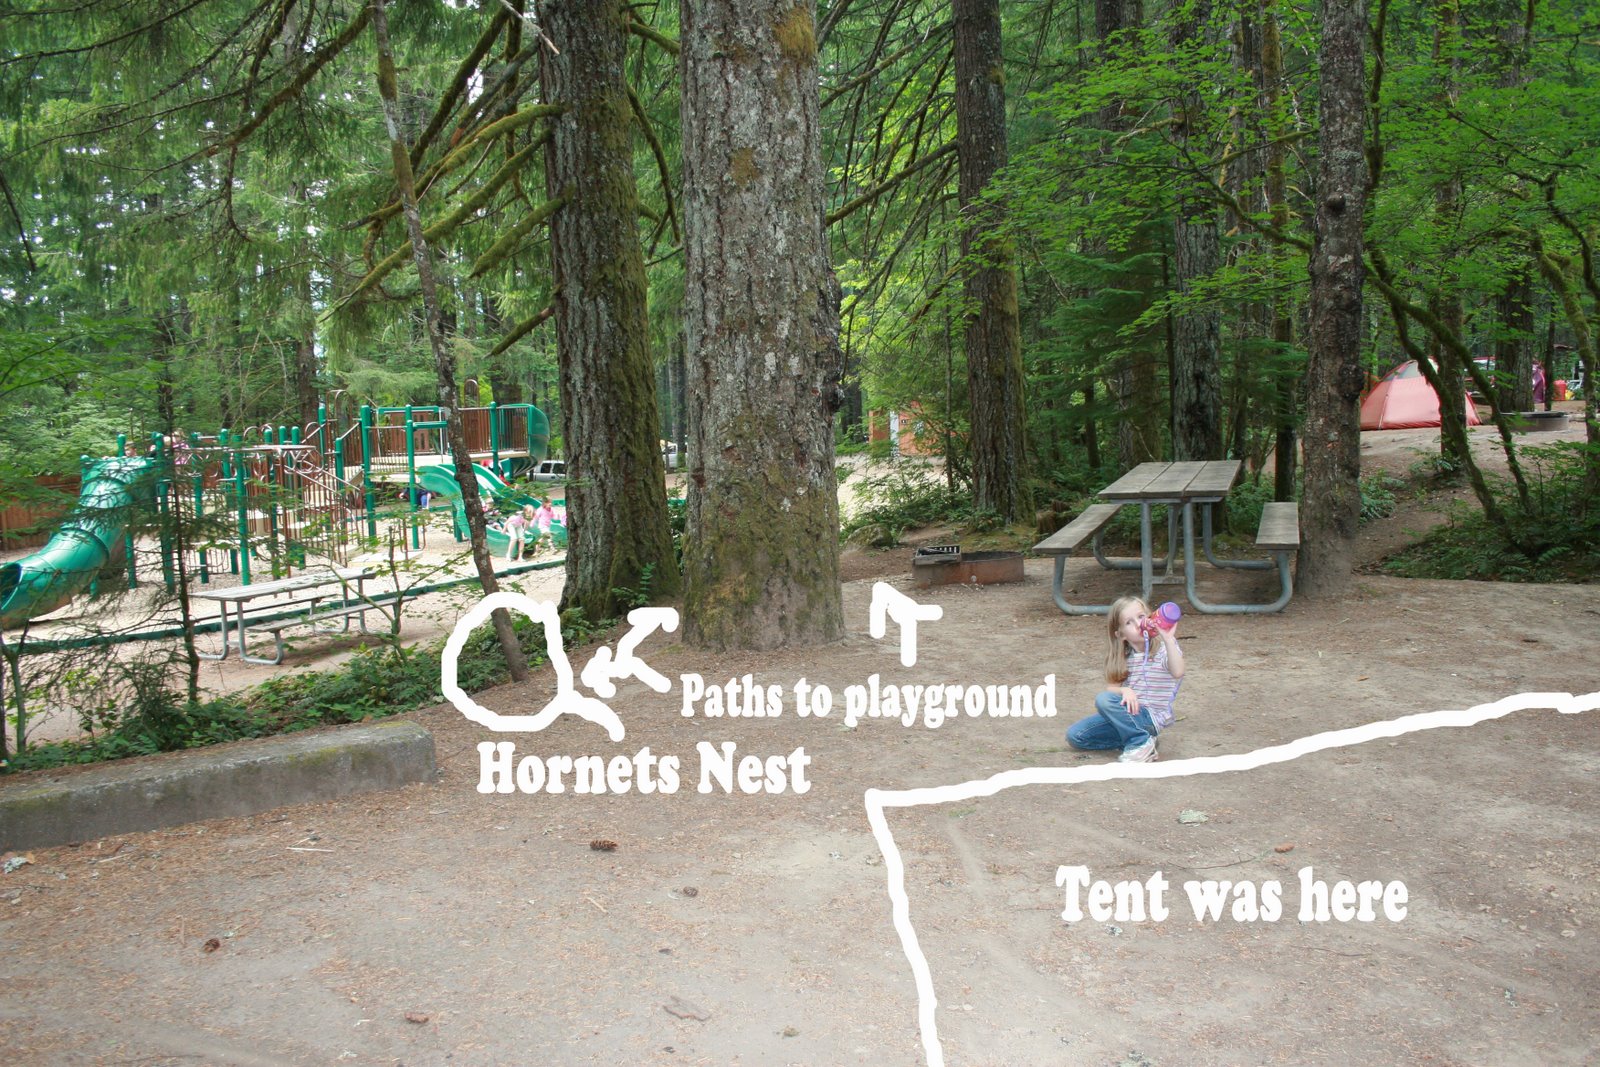 [Camping+trip+hornets+nest+diagram.jpg]